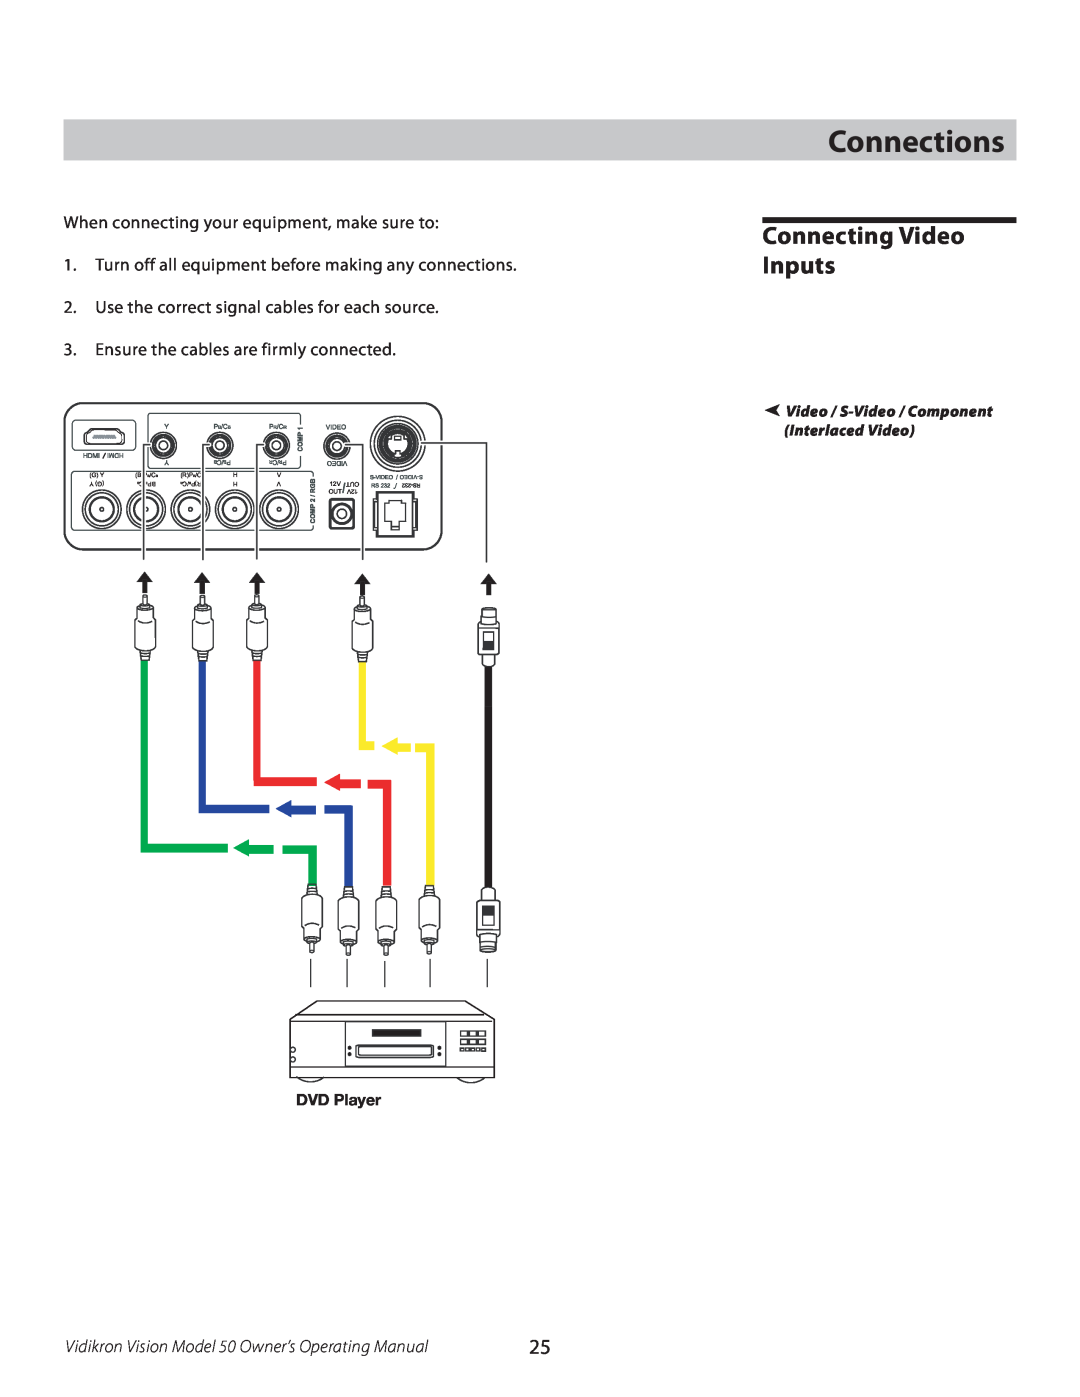 Vidikron manual Connections, Connecting Video Inputs, Vidikron Vision Model 50 Owner’s Operating Manual, DVD Player 